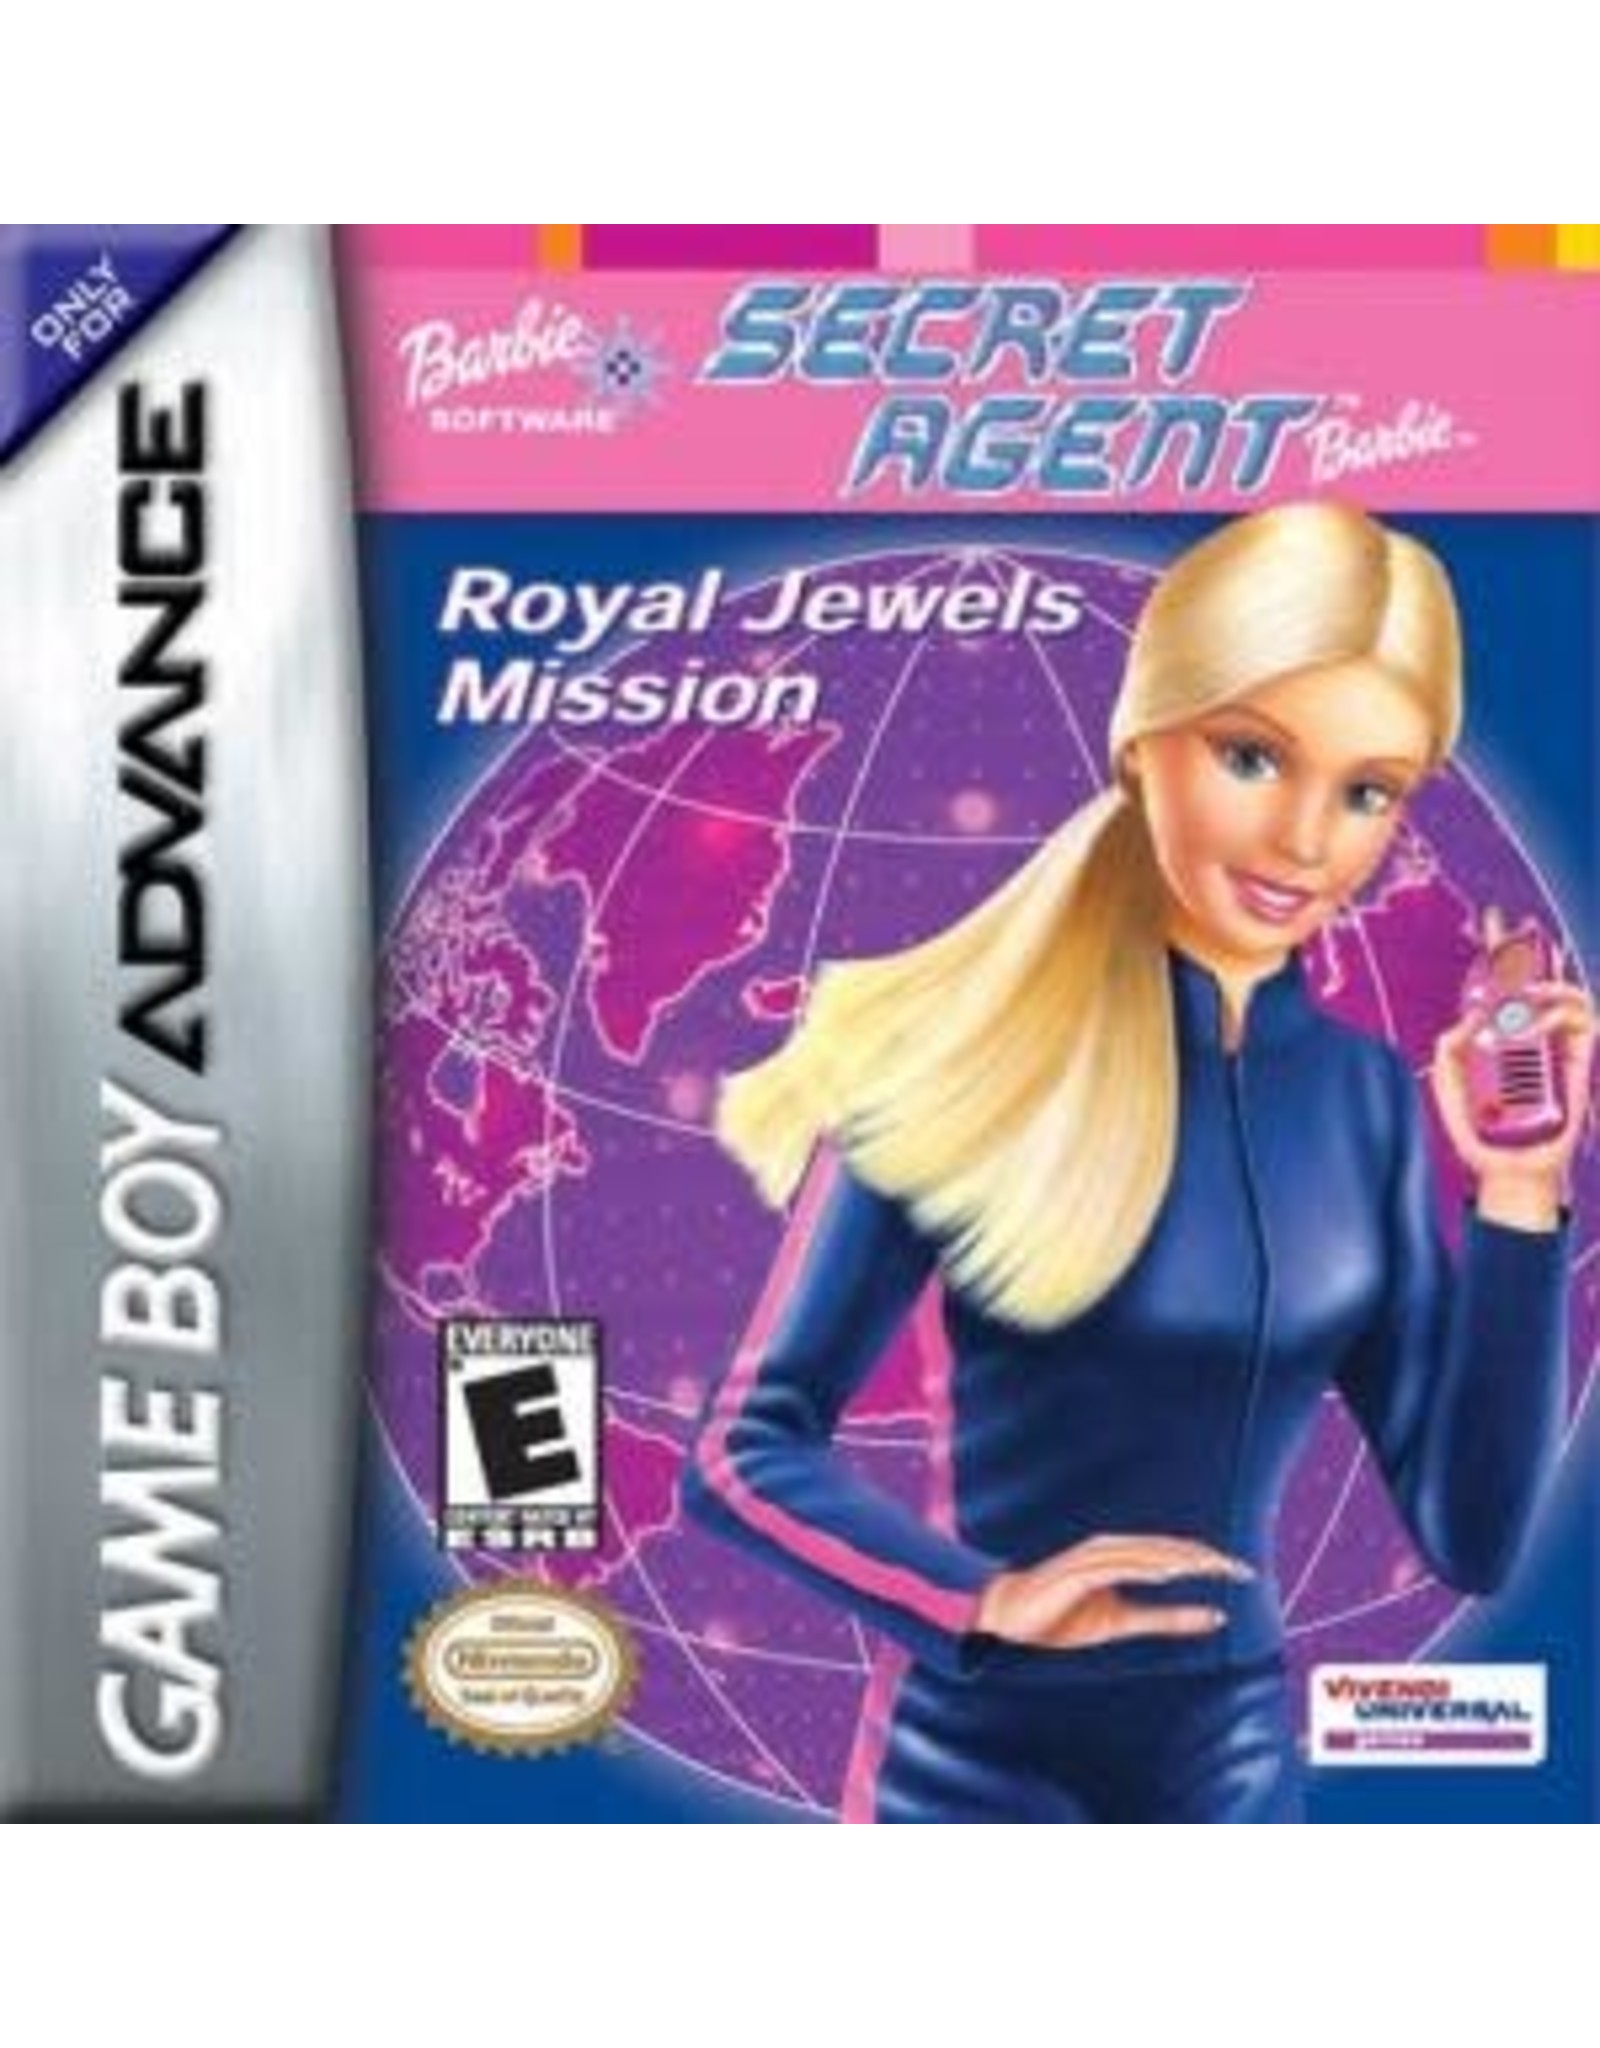 Game Boy Advance Barbie Secret Agent Barbie (Damaged Label)